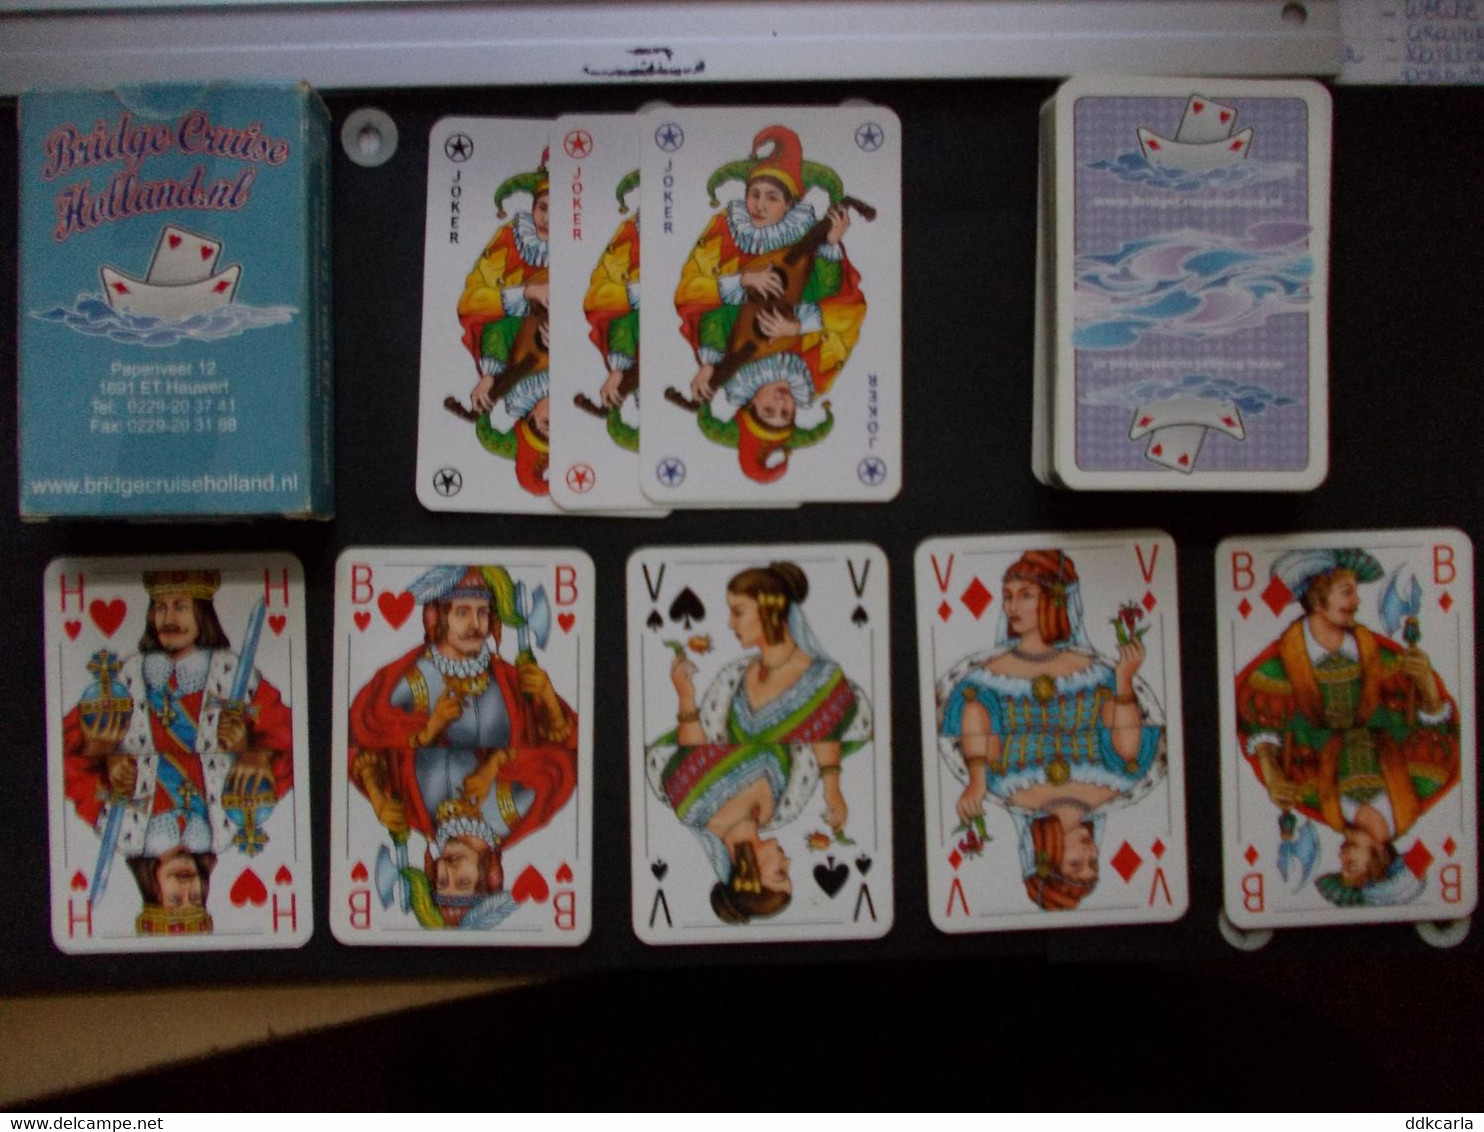 Speelkaarten - Jeu Des Cartes - Bridge Cruise Holland.nl - 52 Kaarten + 3 Jokers - 54 Cards